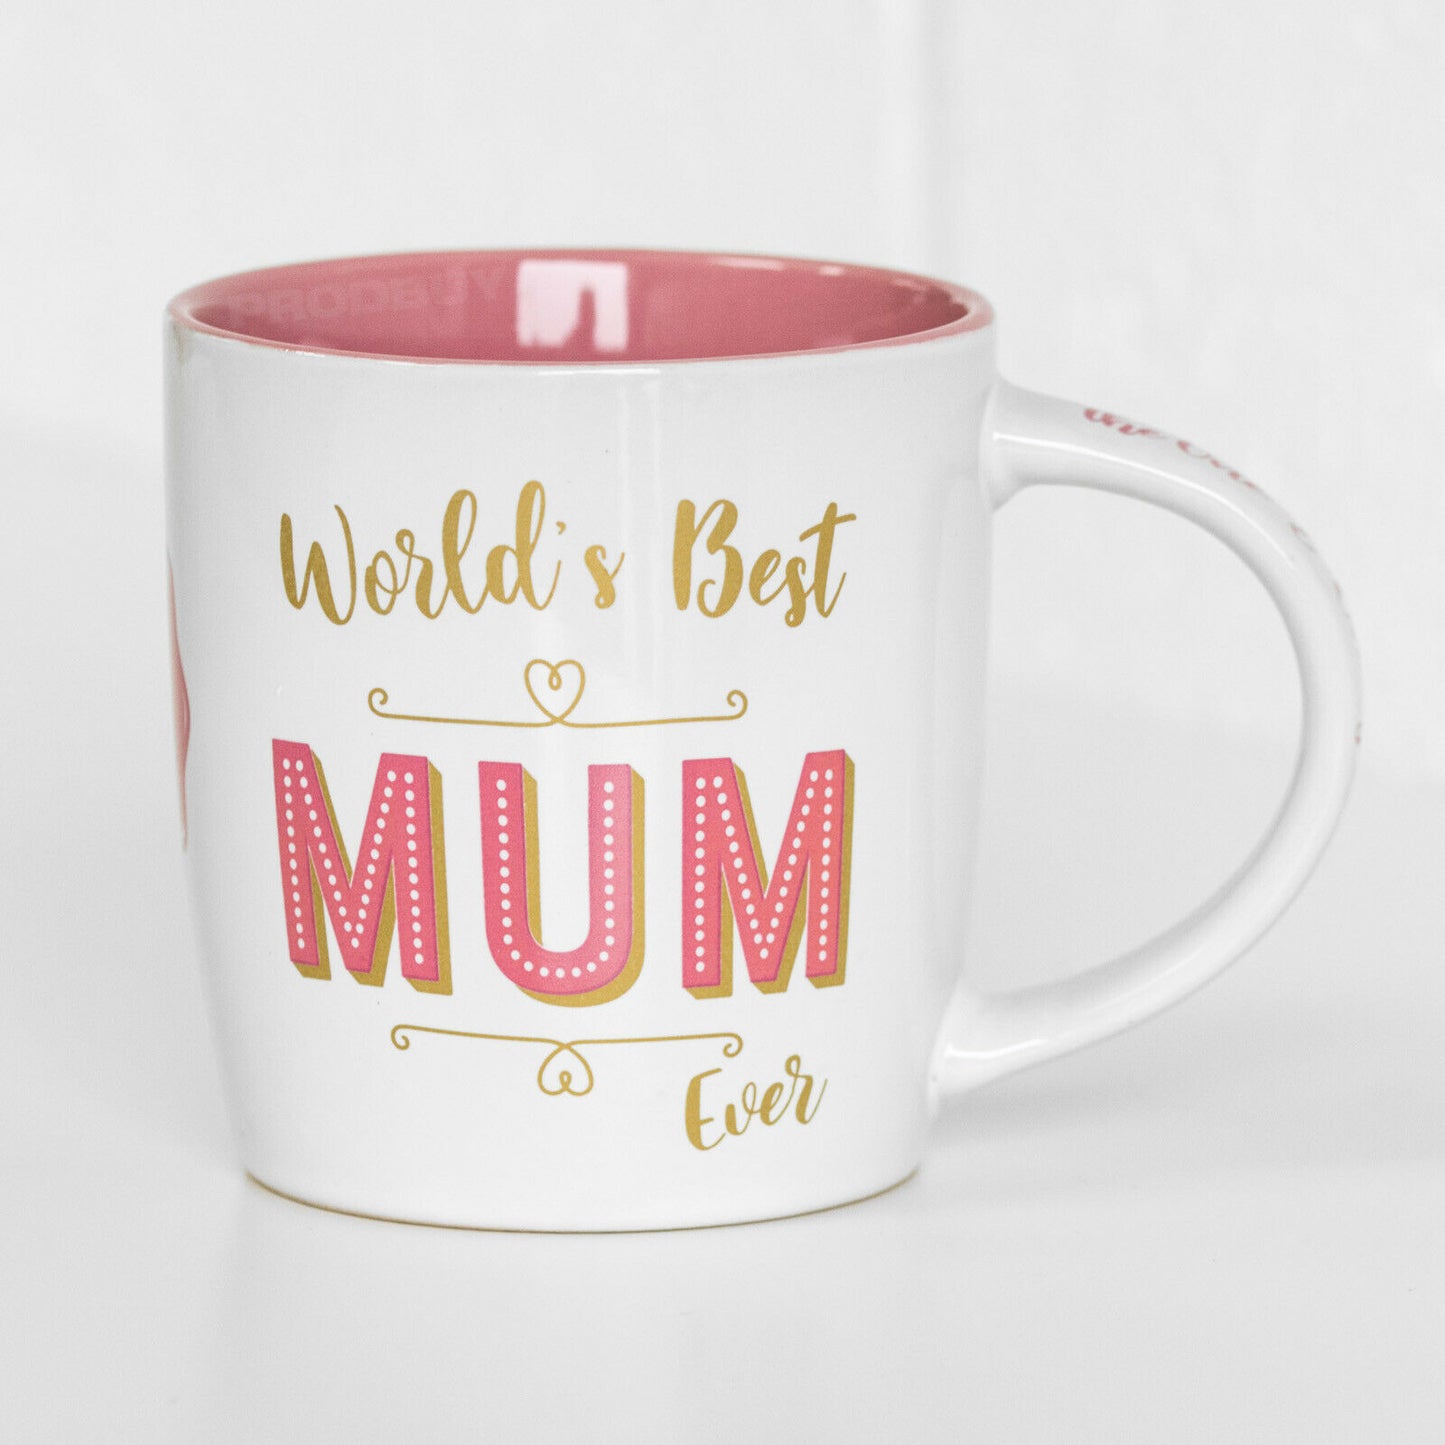 'Number 1 Mum' Ceramic Coffee Mug